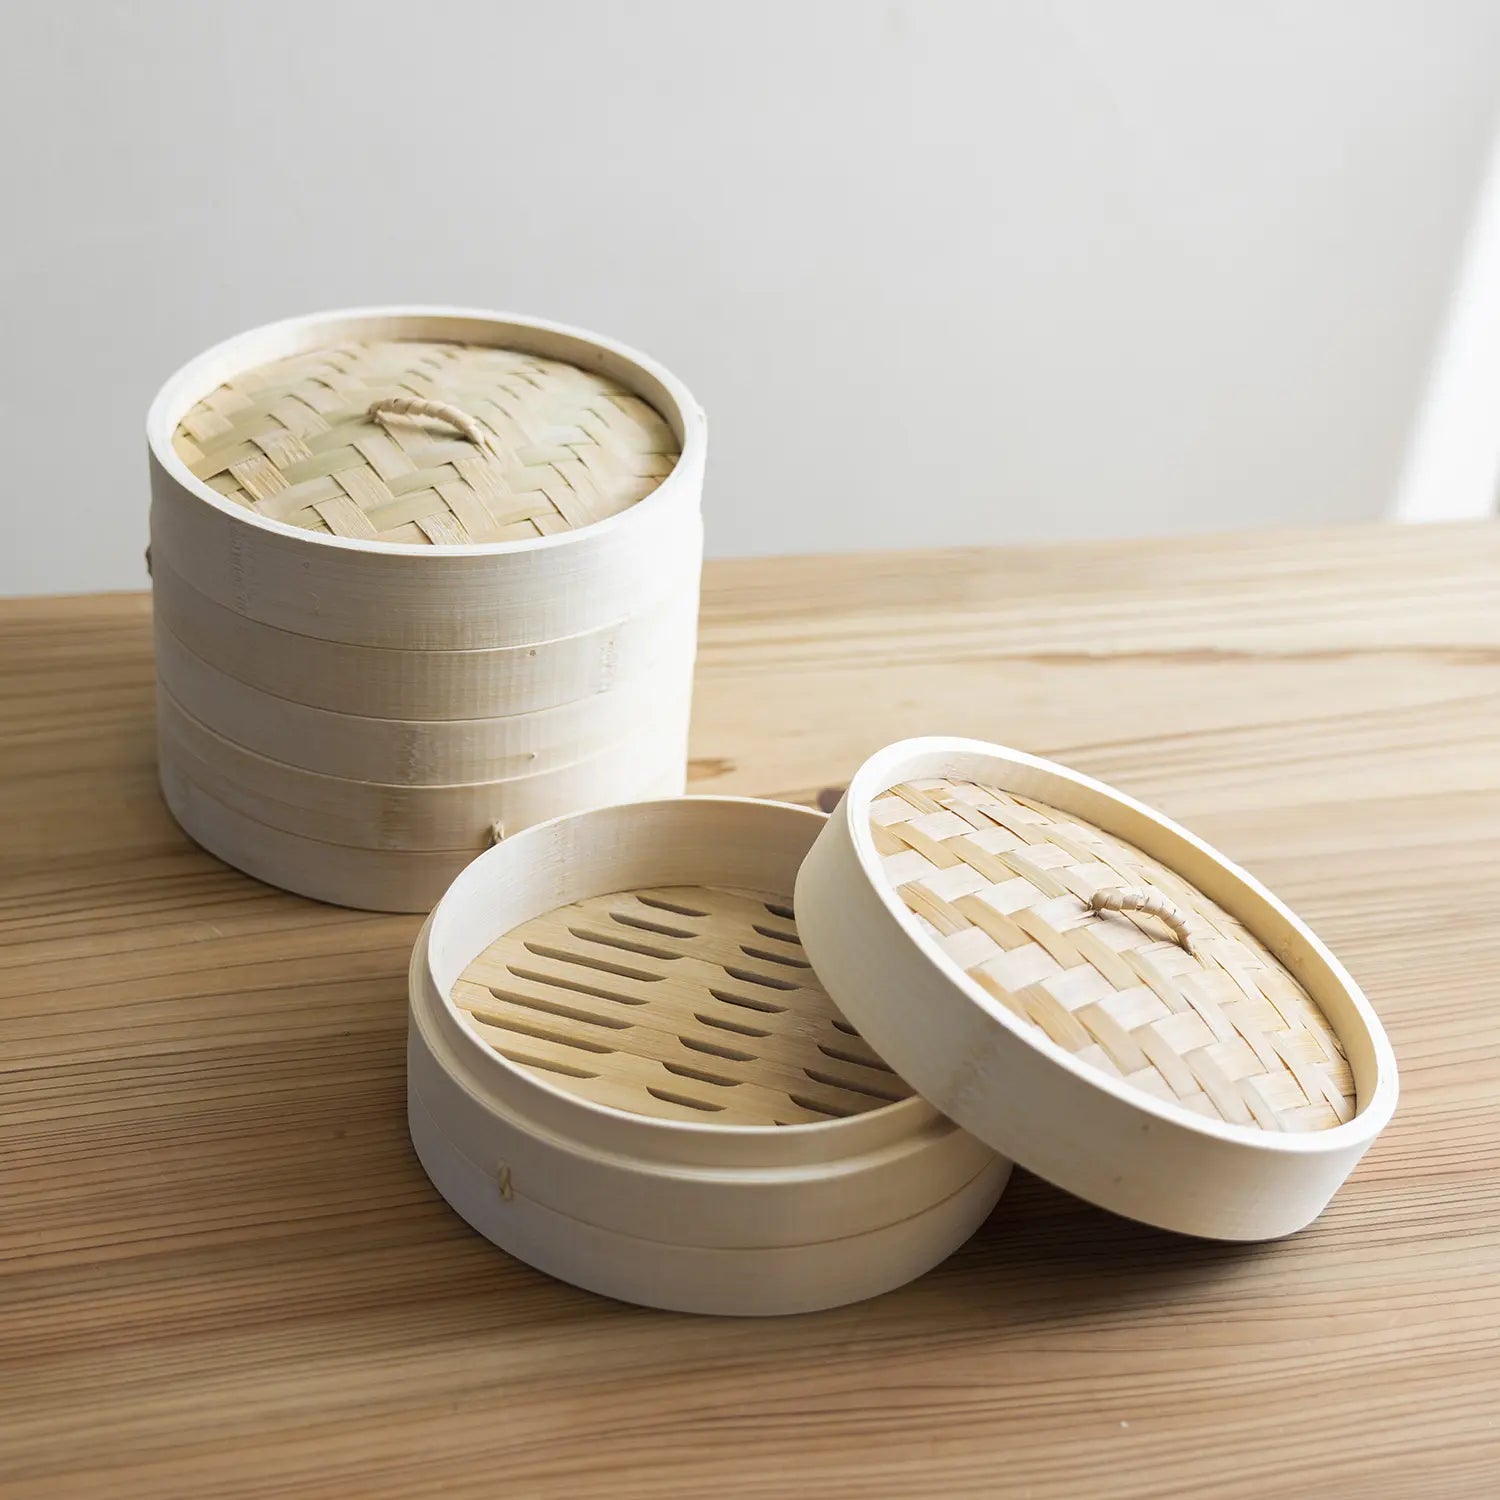 Japanese Bamboo Steamer: Craftsmanship Meets Sustainable Cooking – Irasshai, Online Store